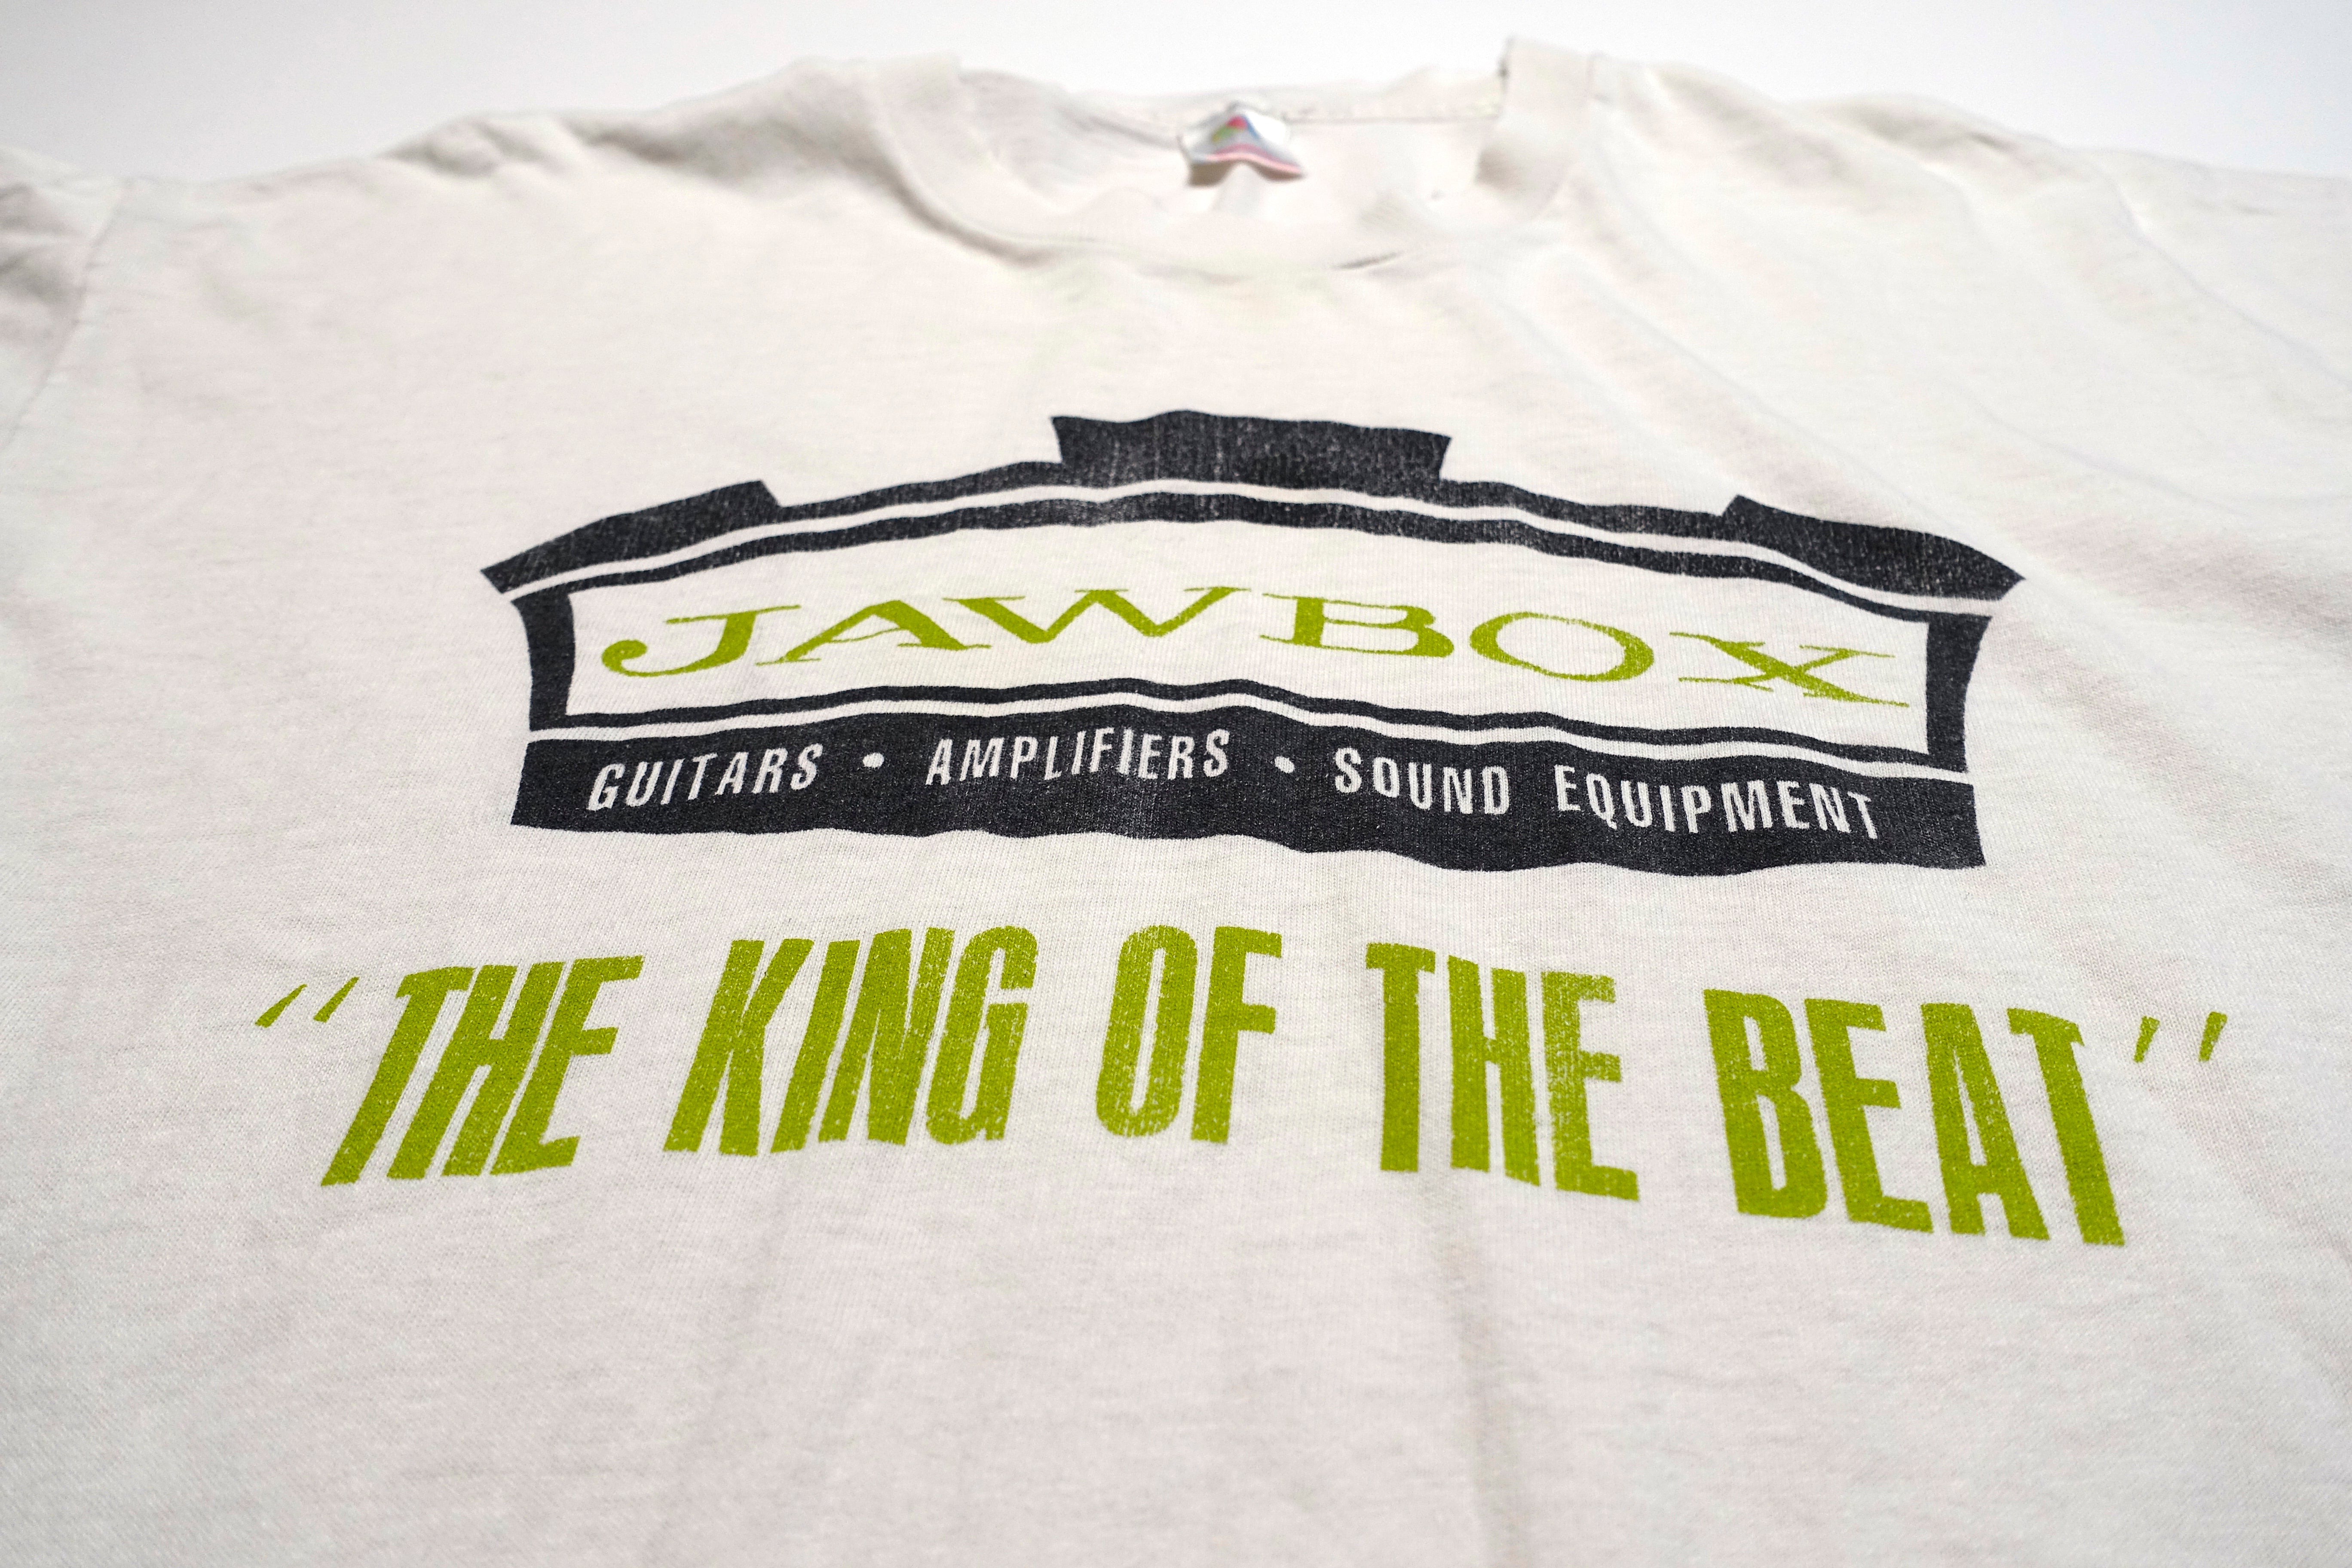 Jawbox - King Of the Beat 90's Tour Shirt Size XL